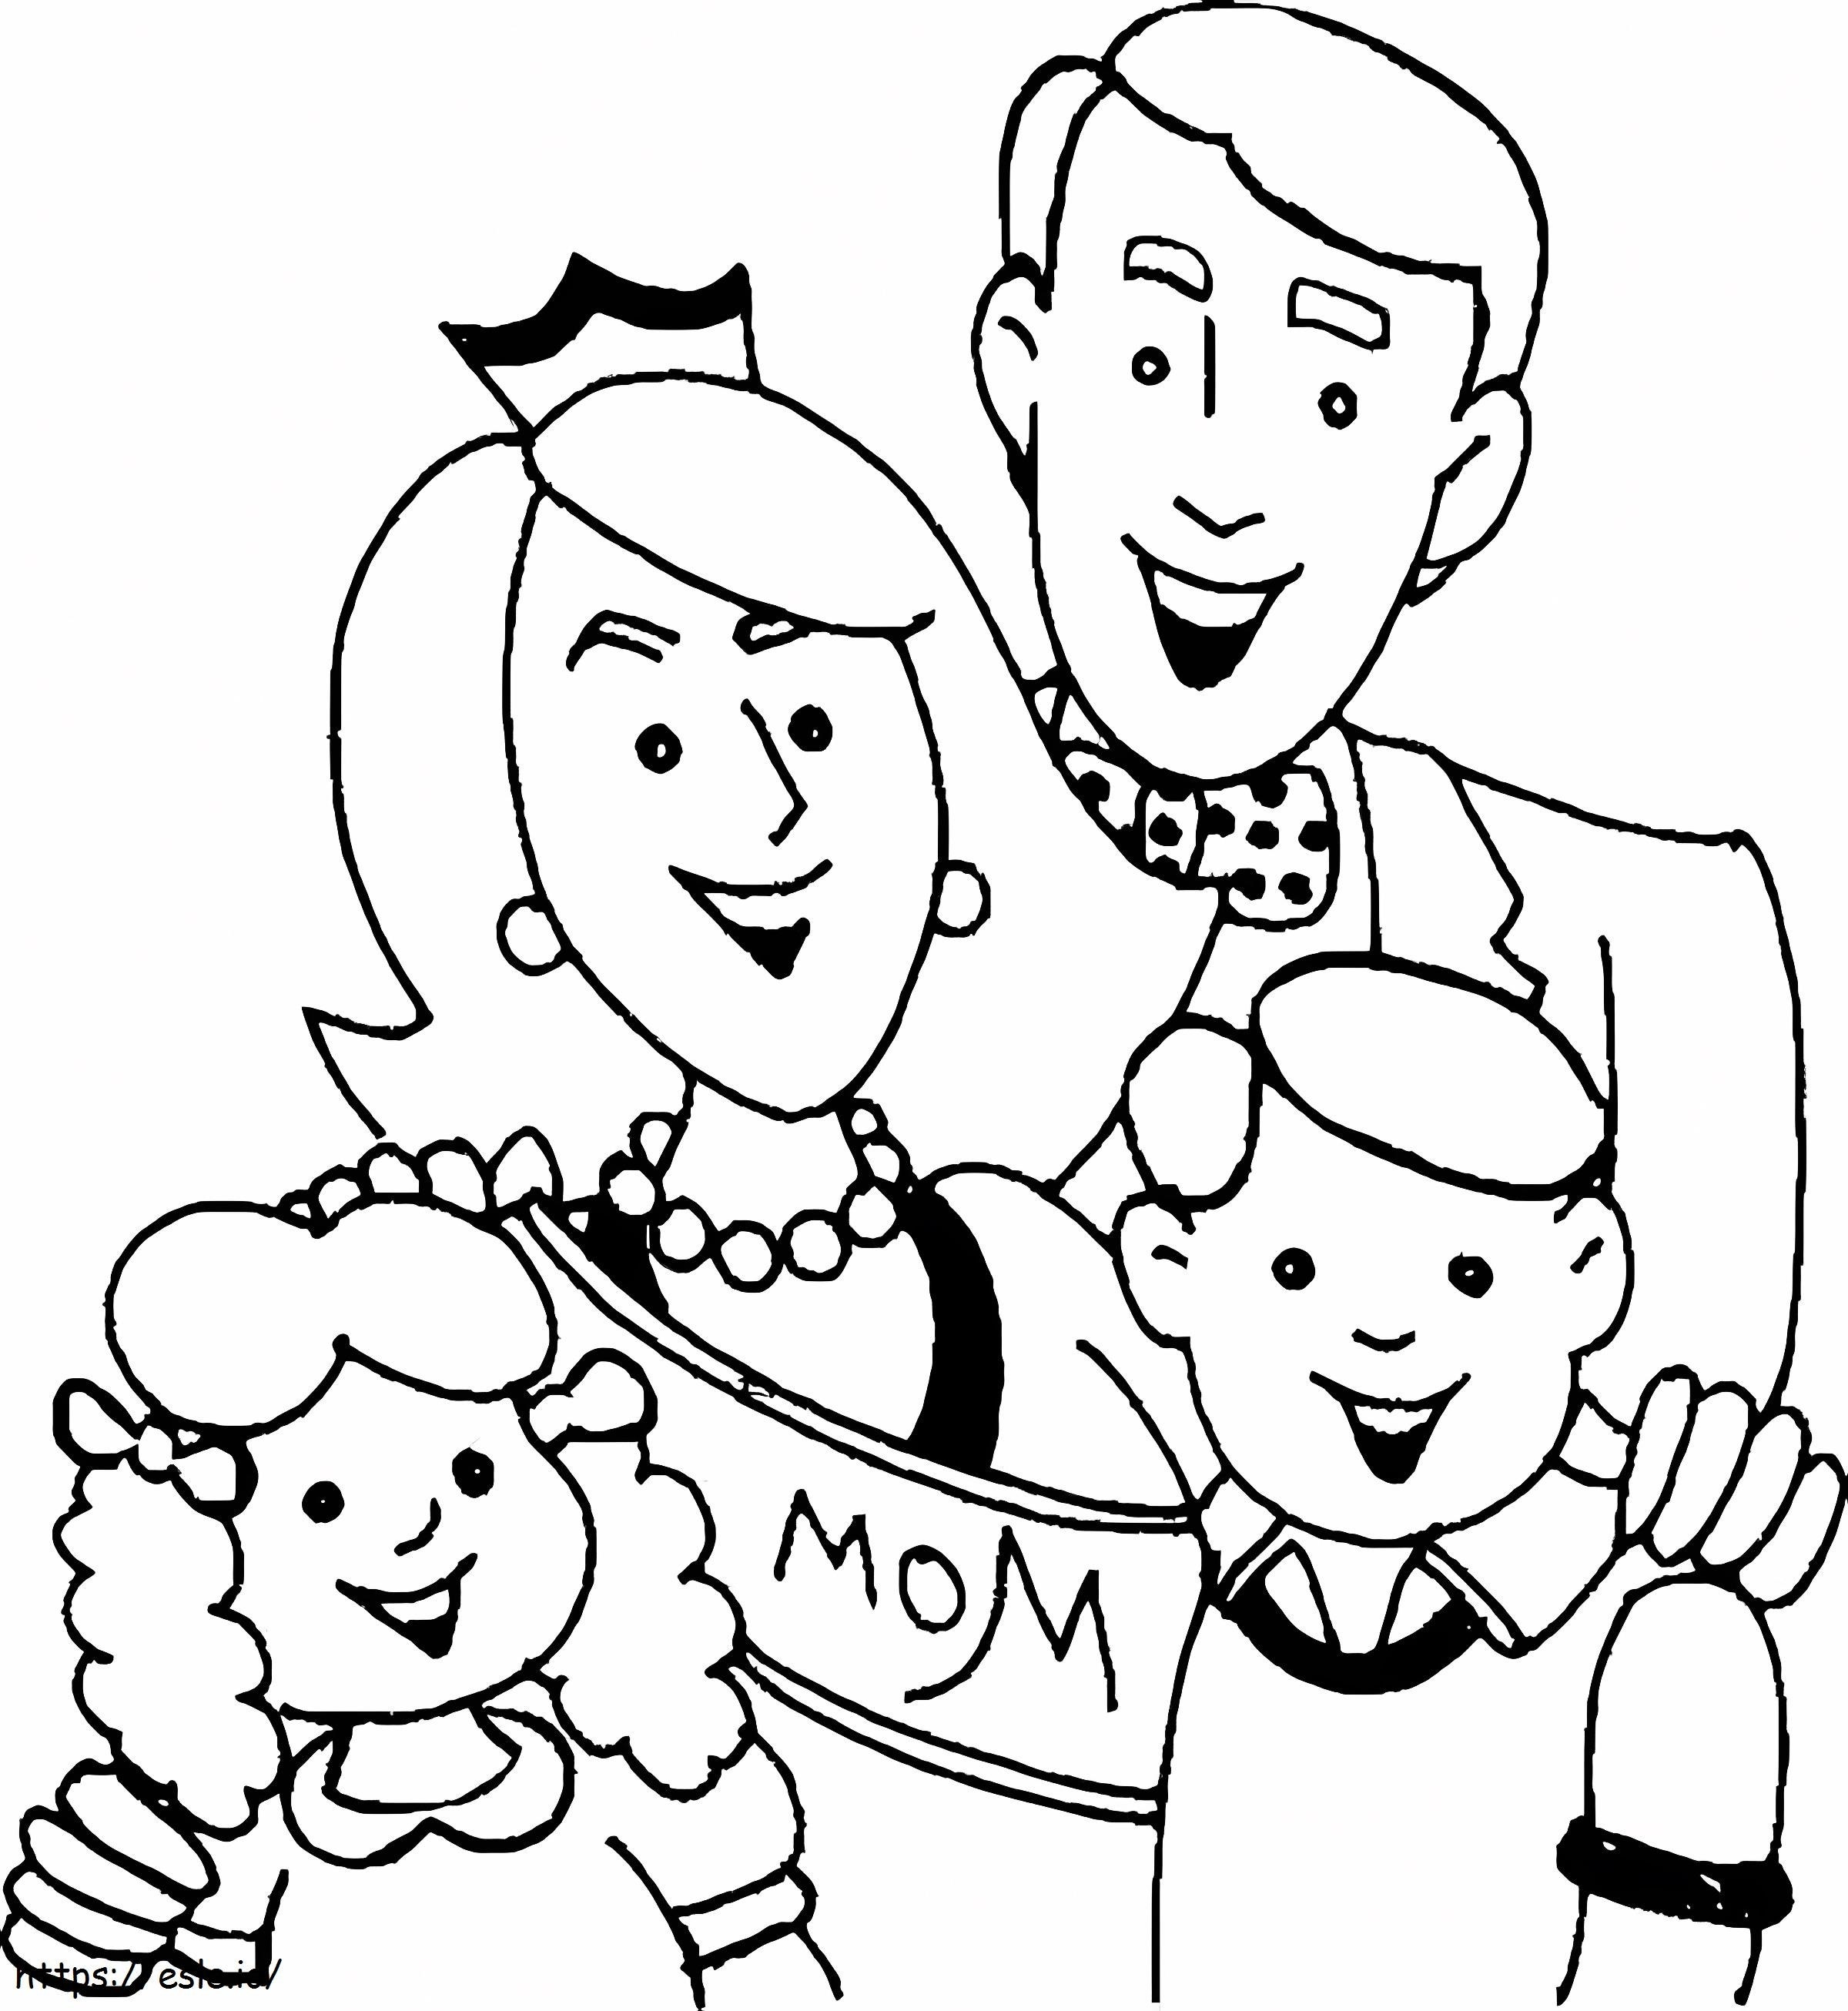 Family Portrait coloring page